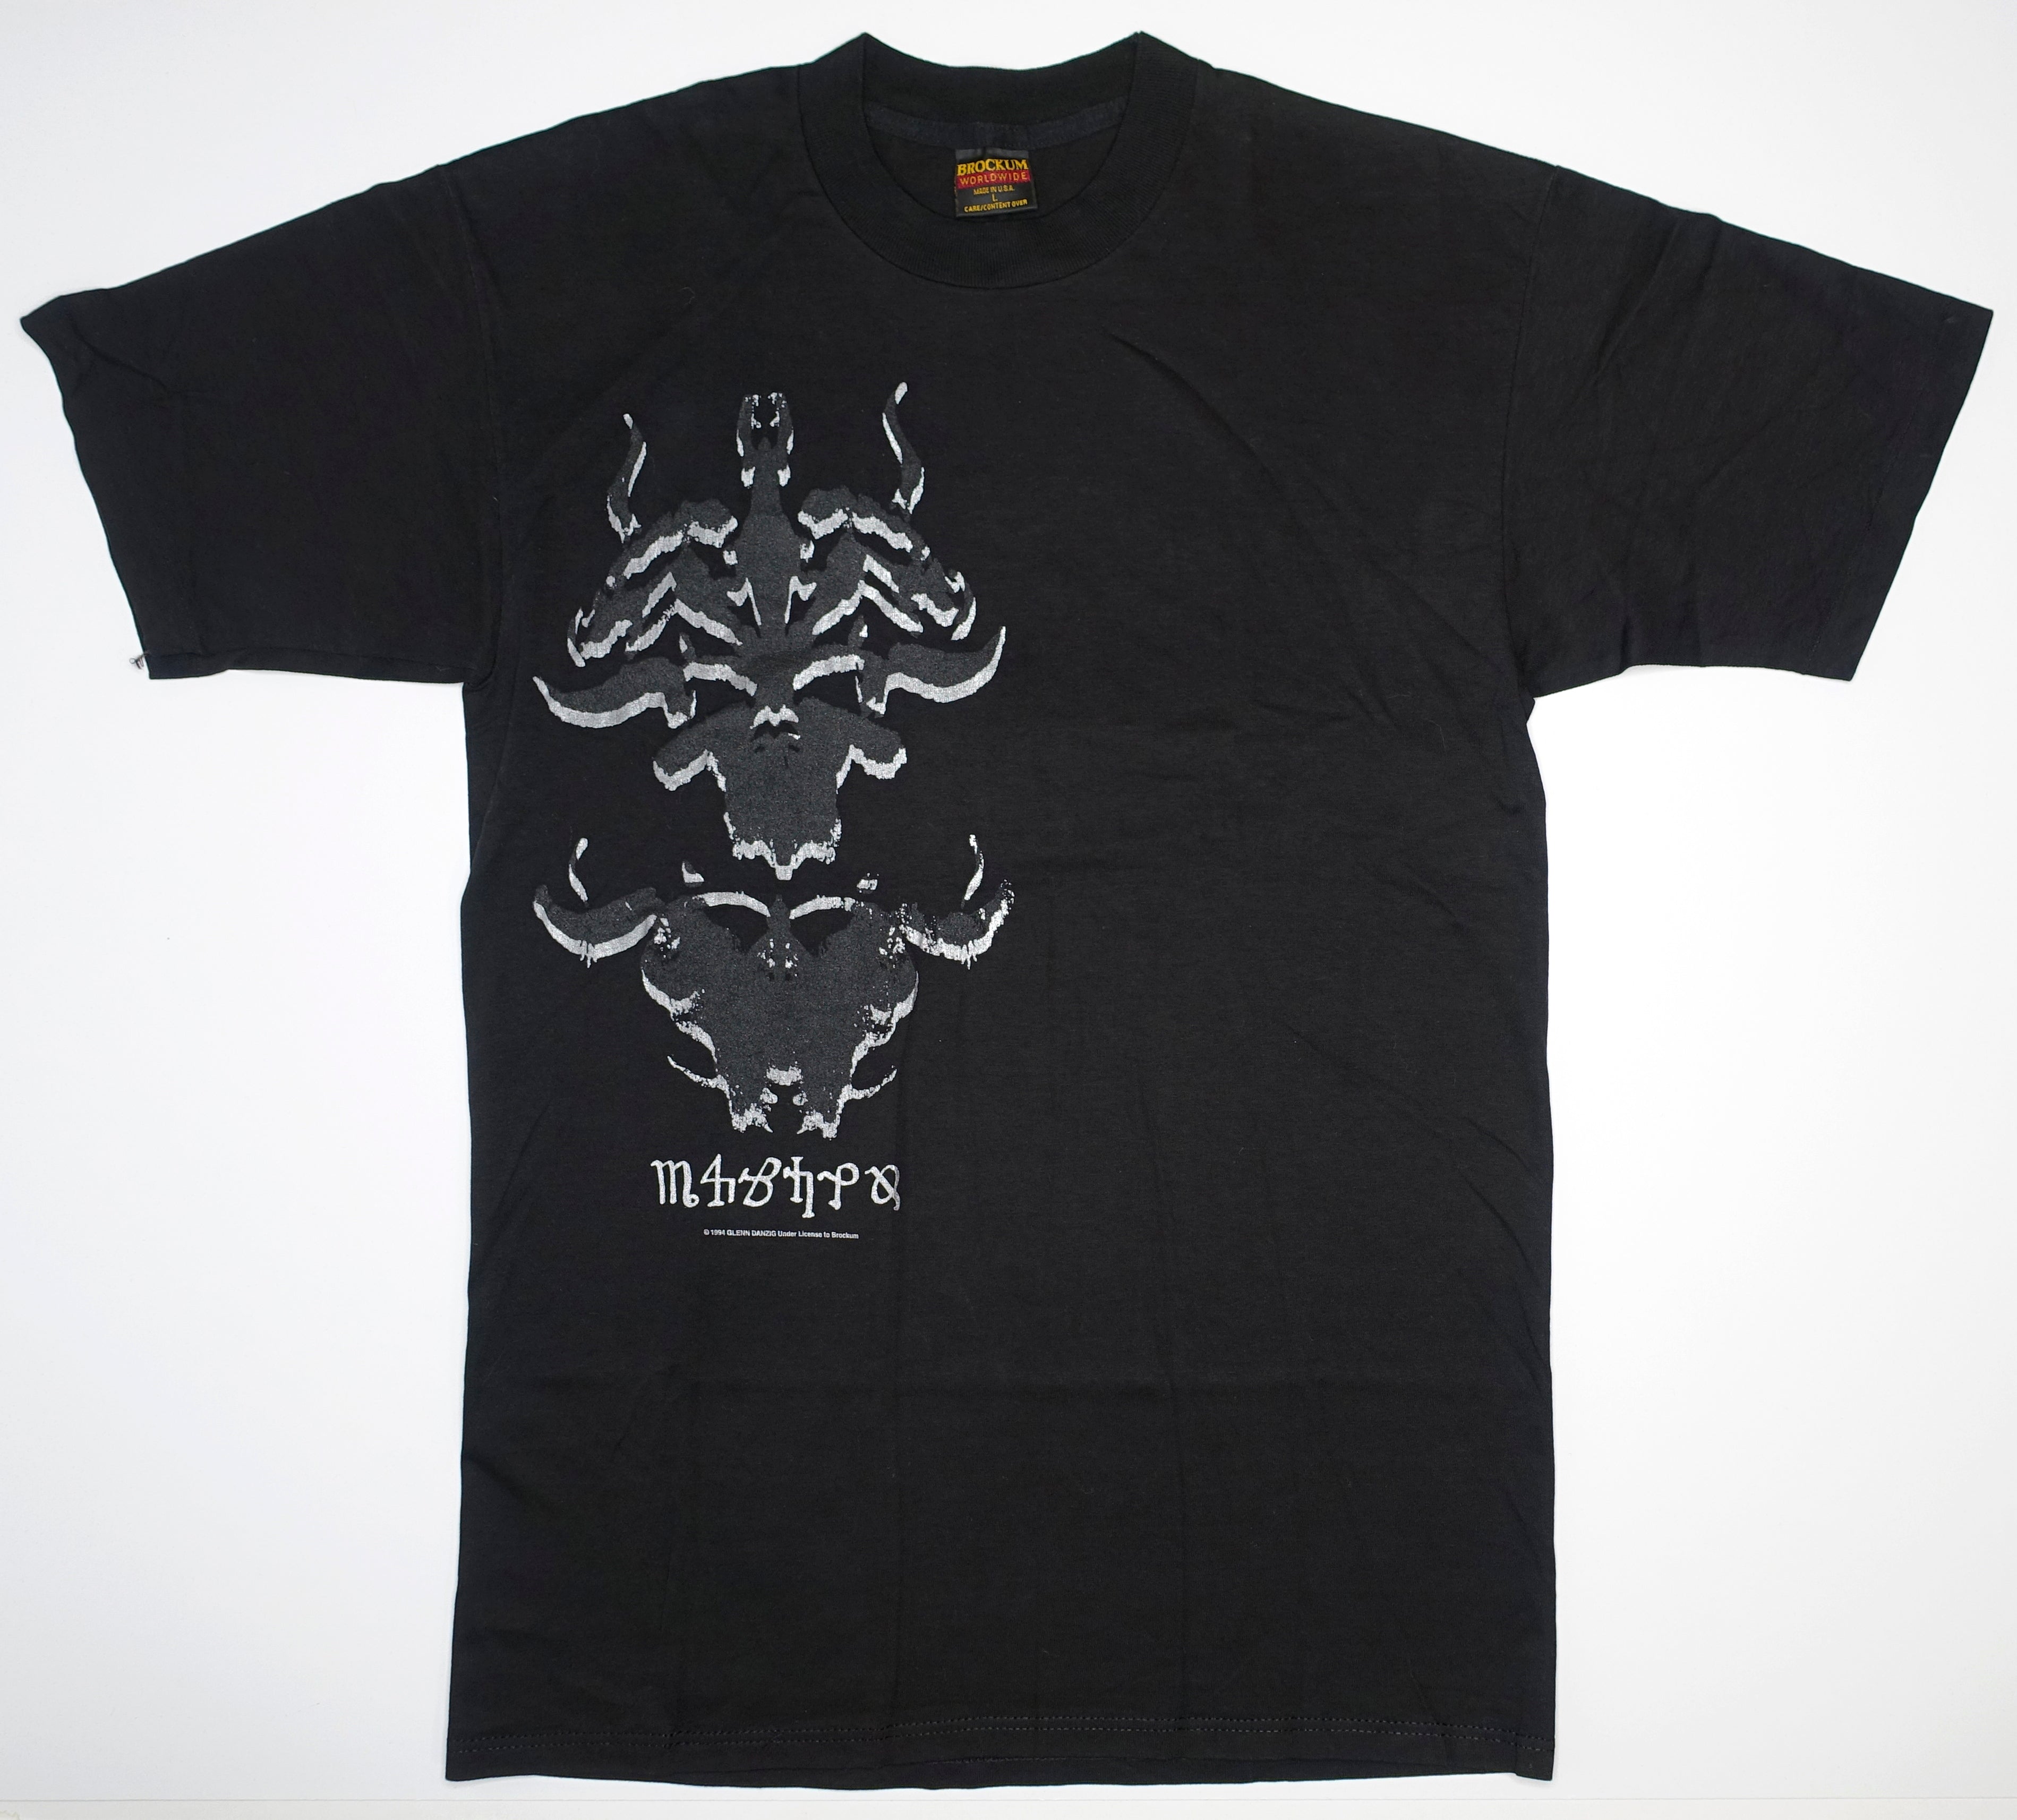 Danzig - 4P 1994 North American Tour Shirt Size Large / Medium (Blacker Version)